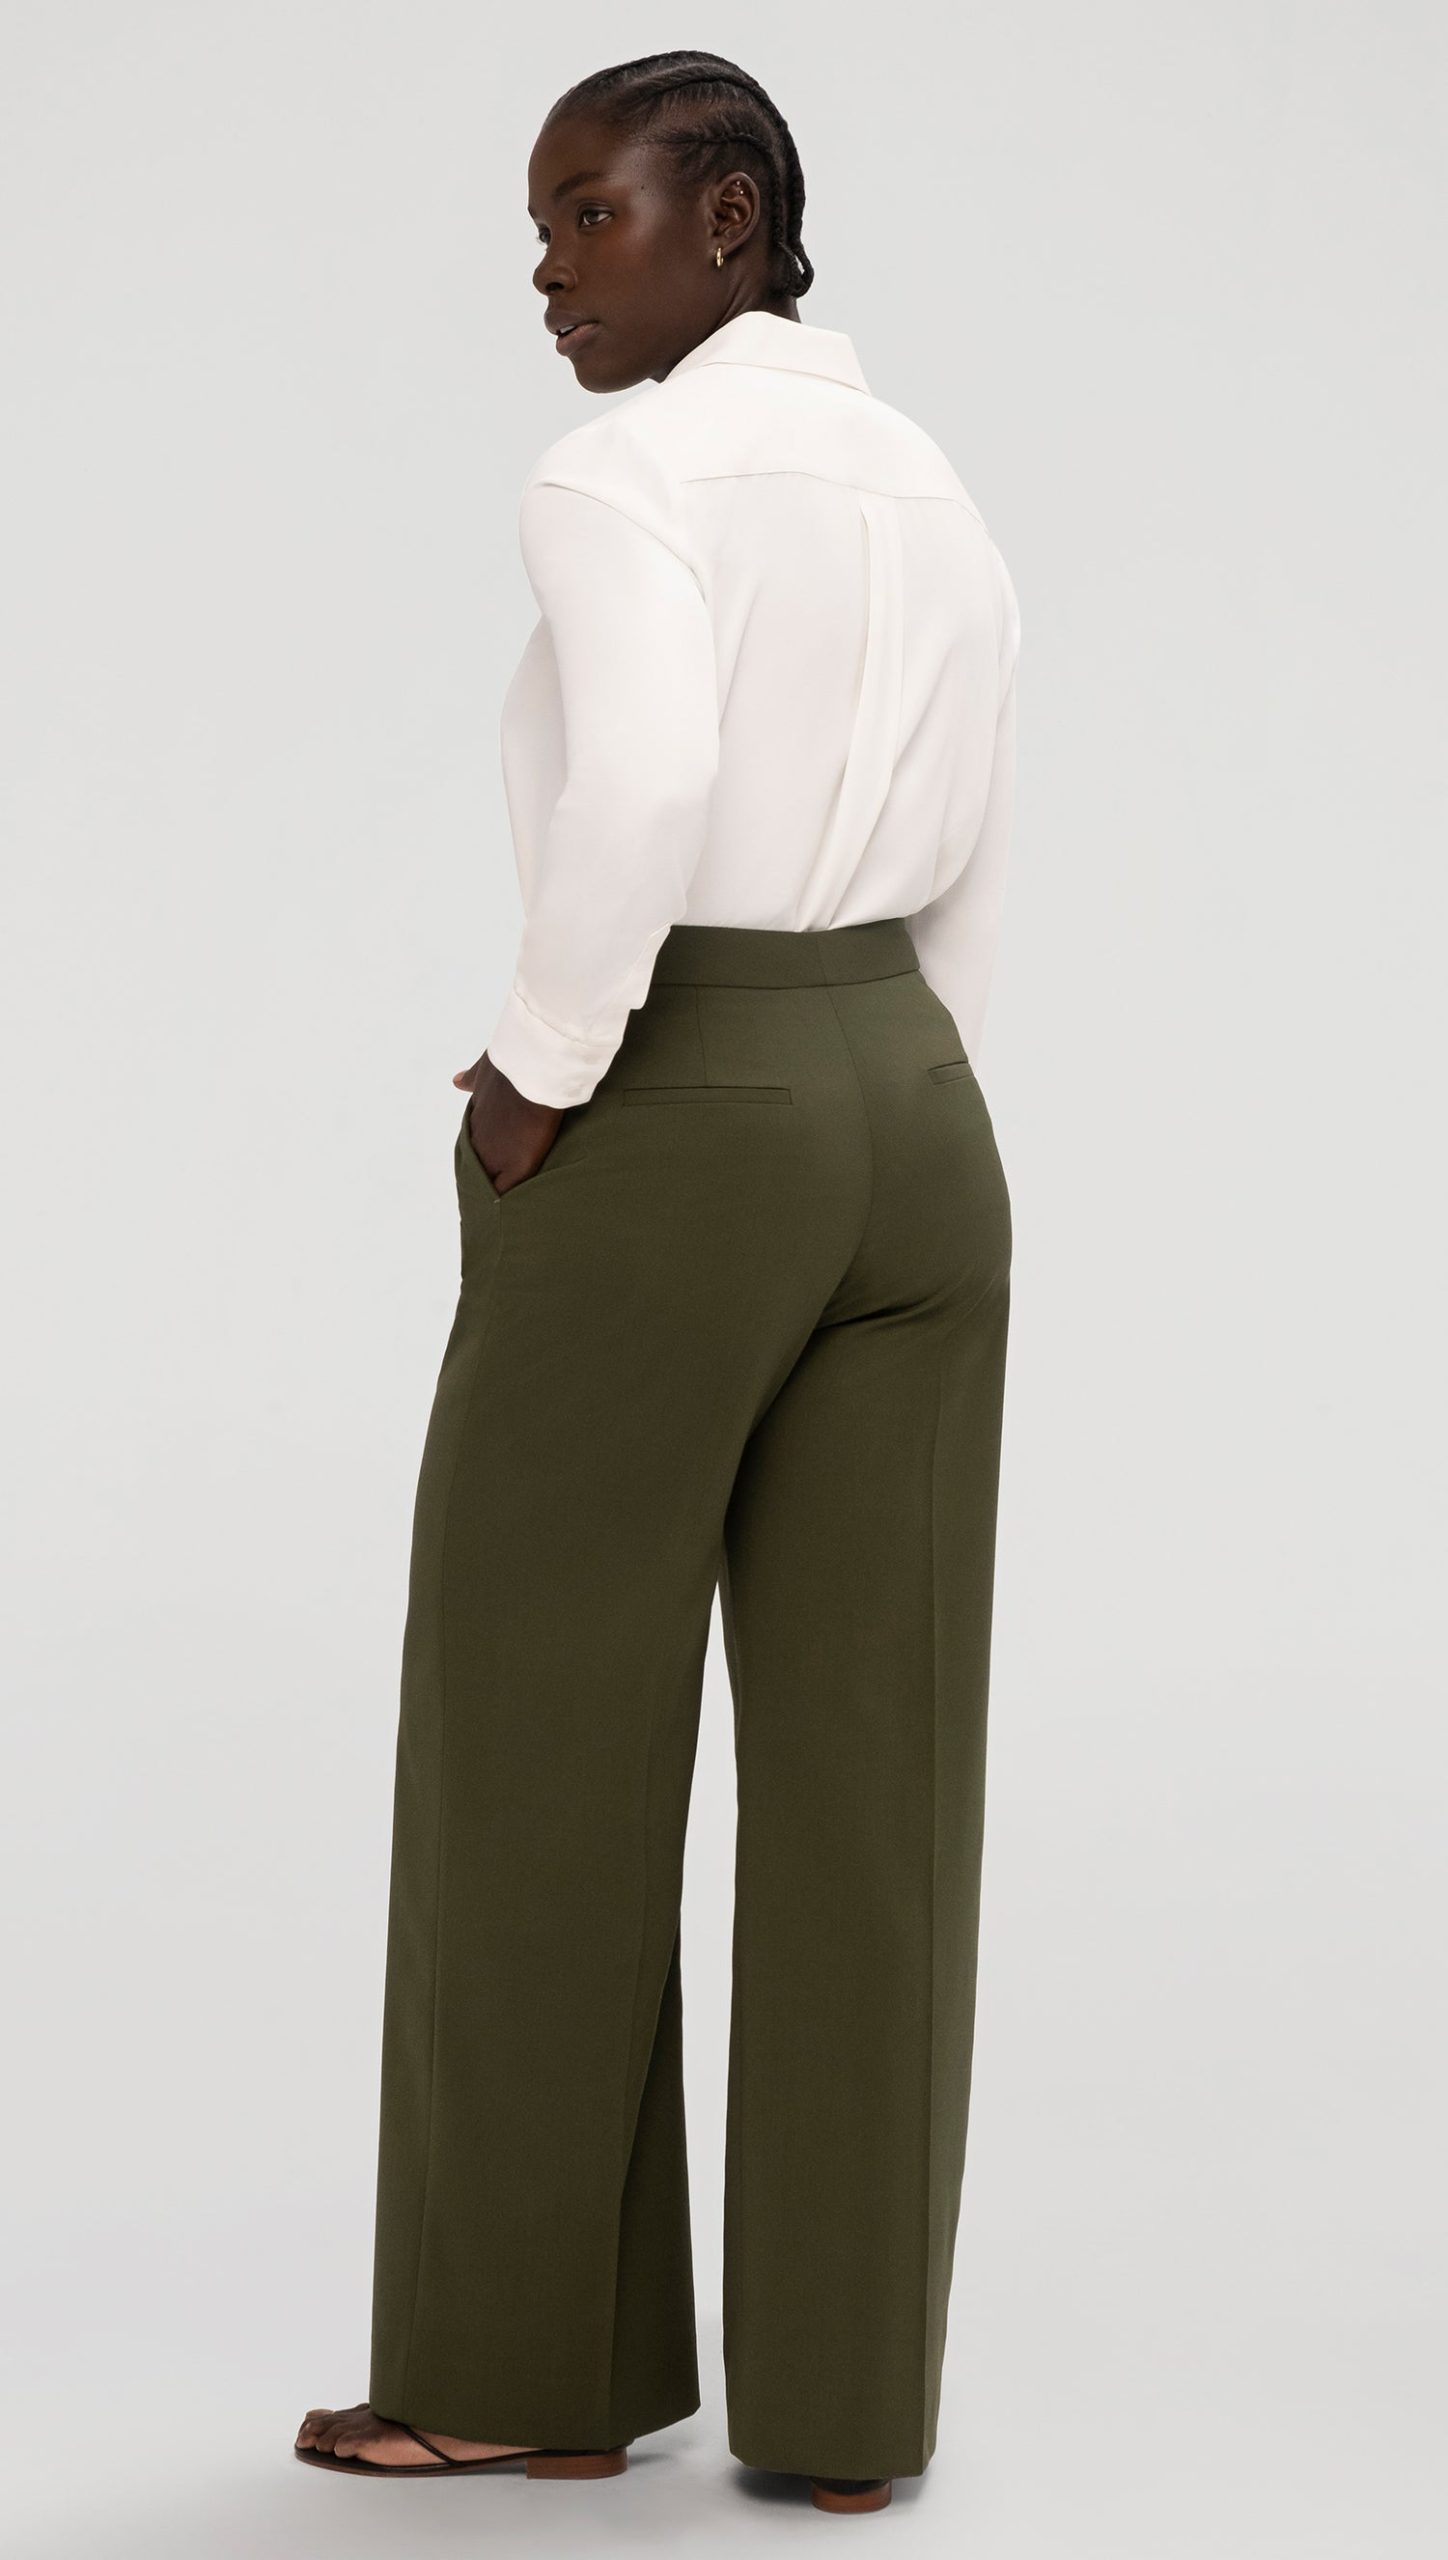 Olive pants women – A Timeless Wardrobe Essential缩略图